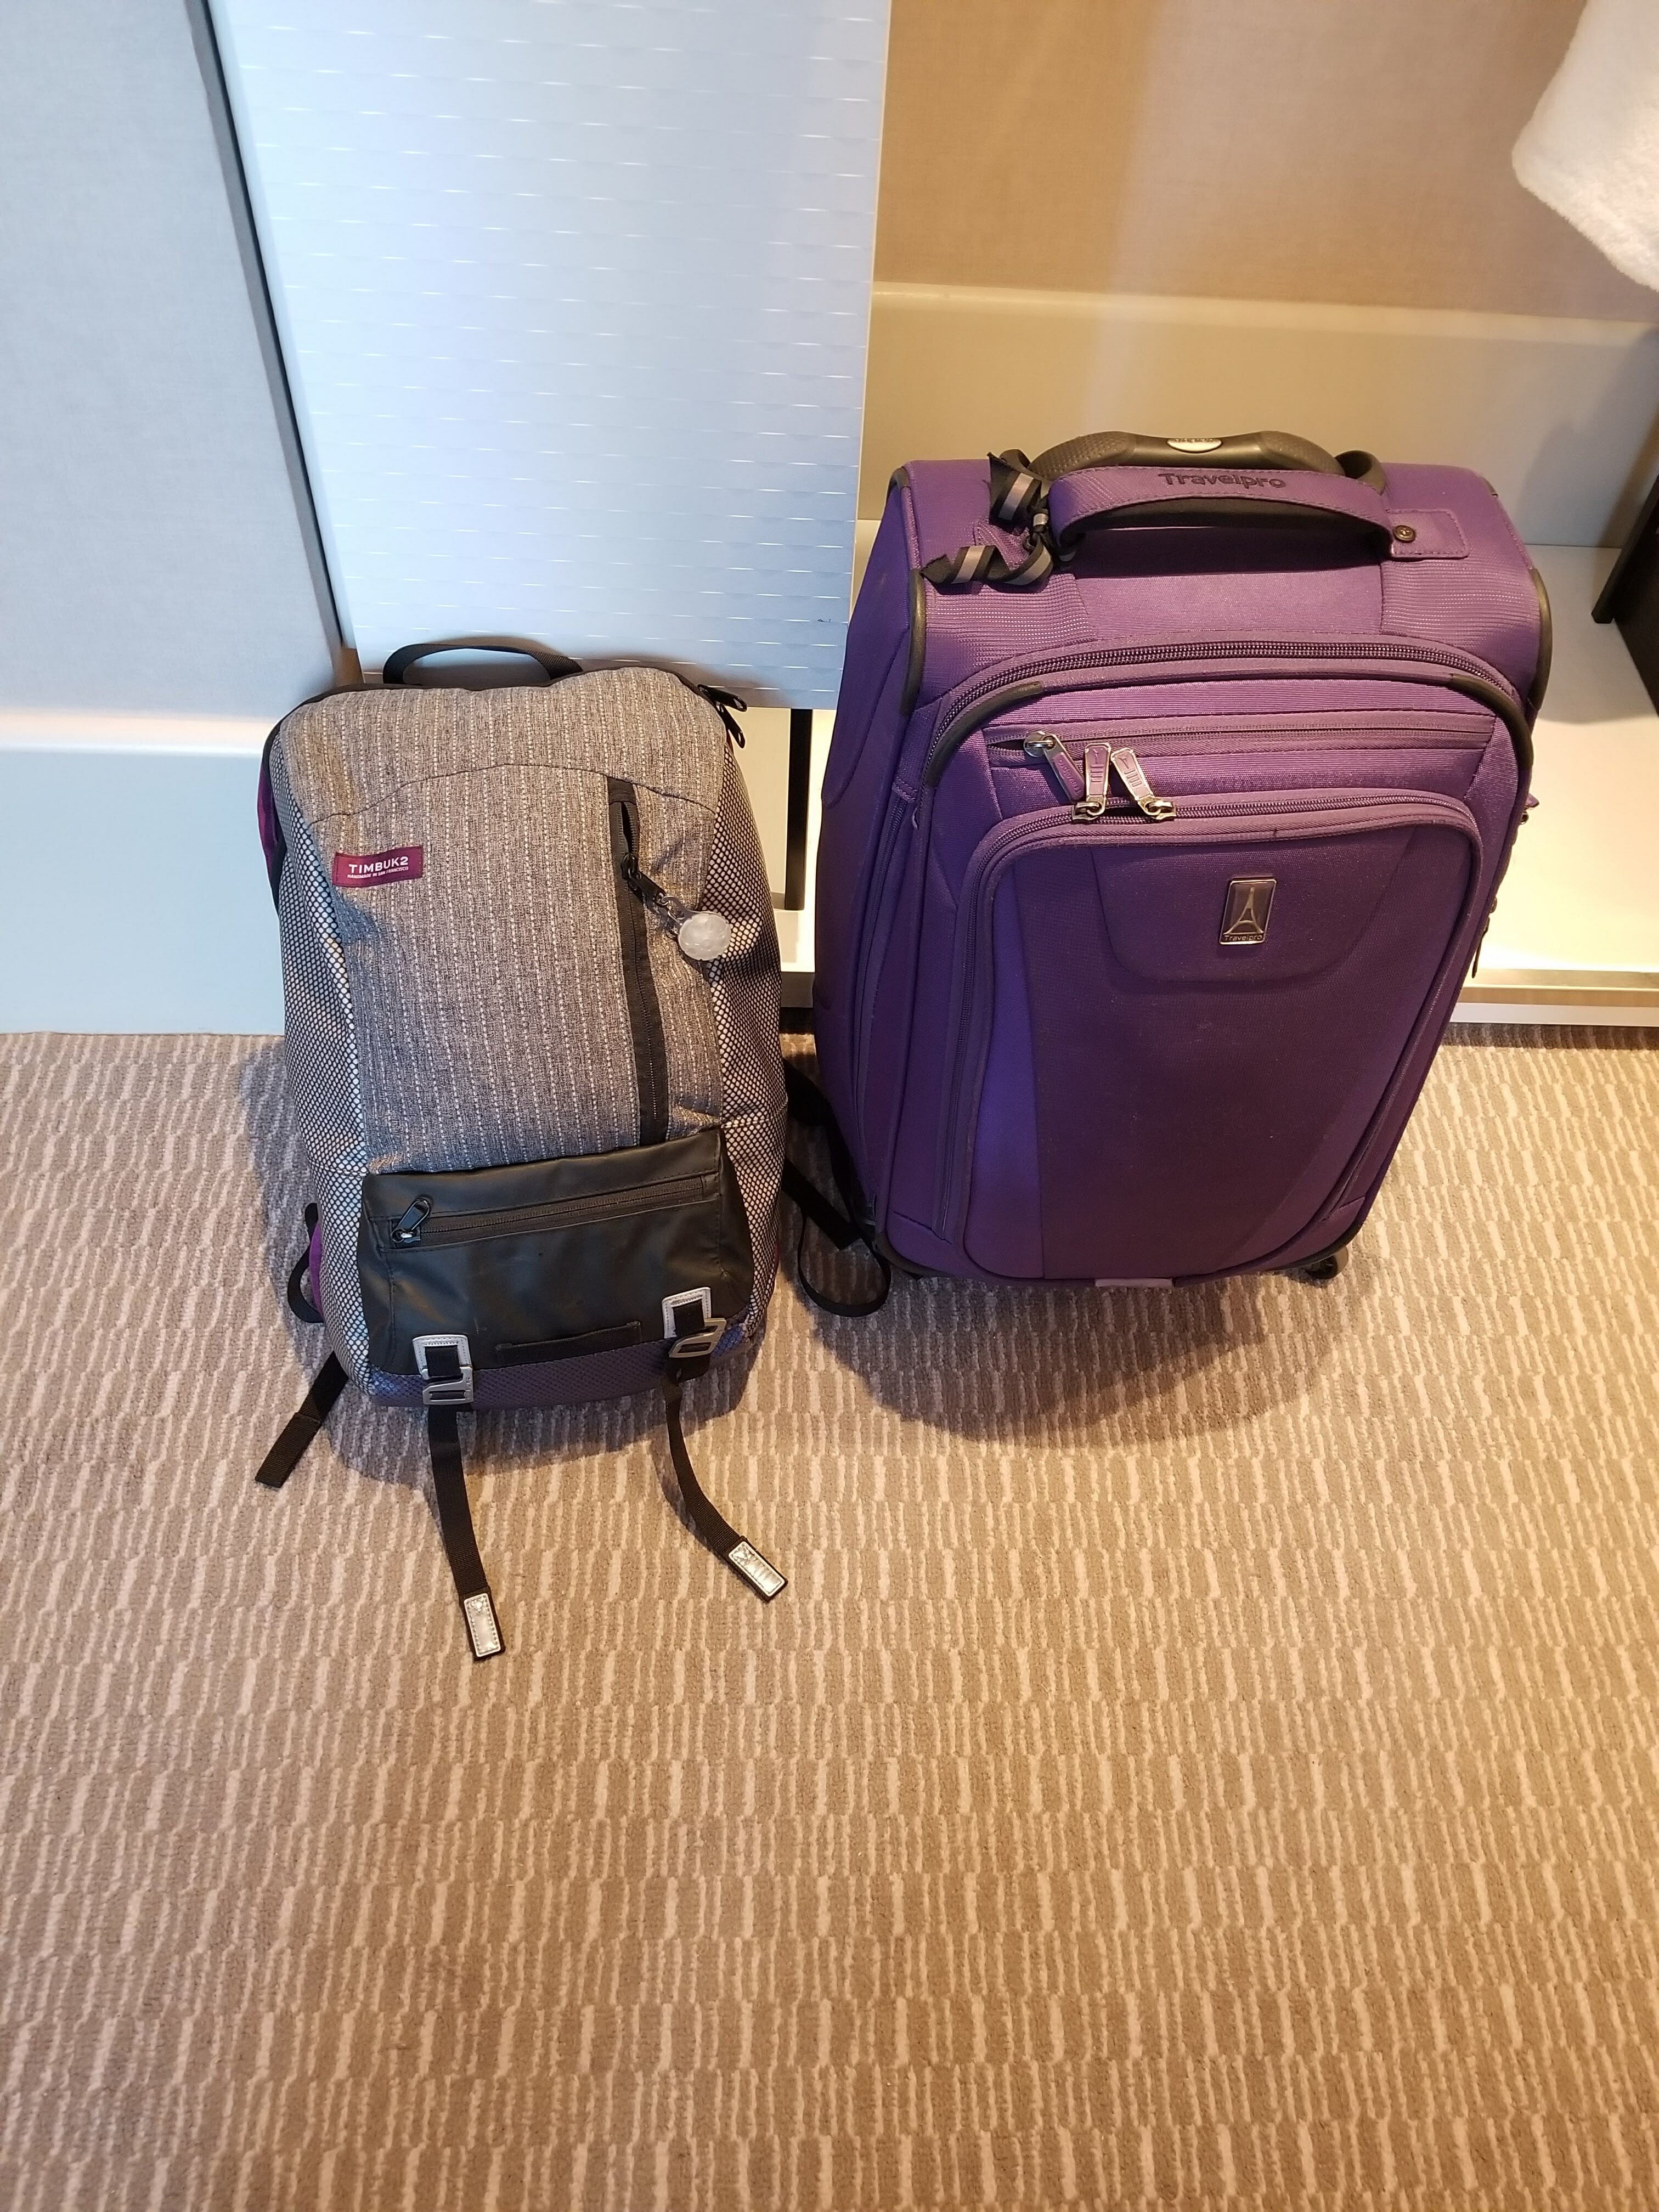 One medium-sized backpack, one 22-inch suitcase